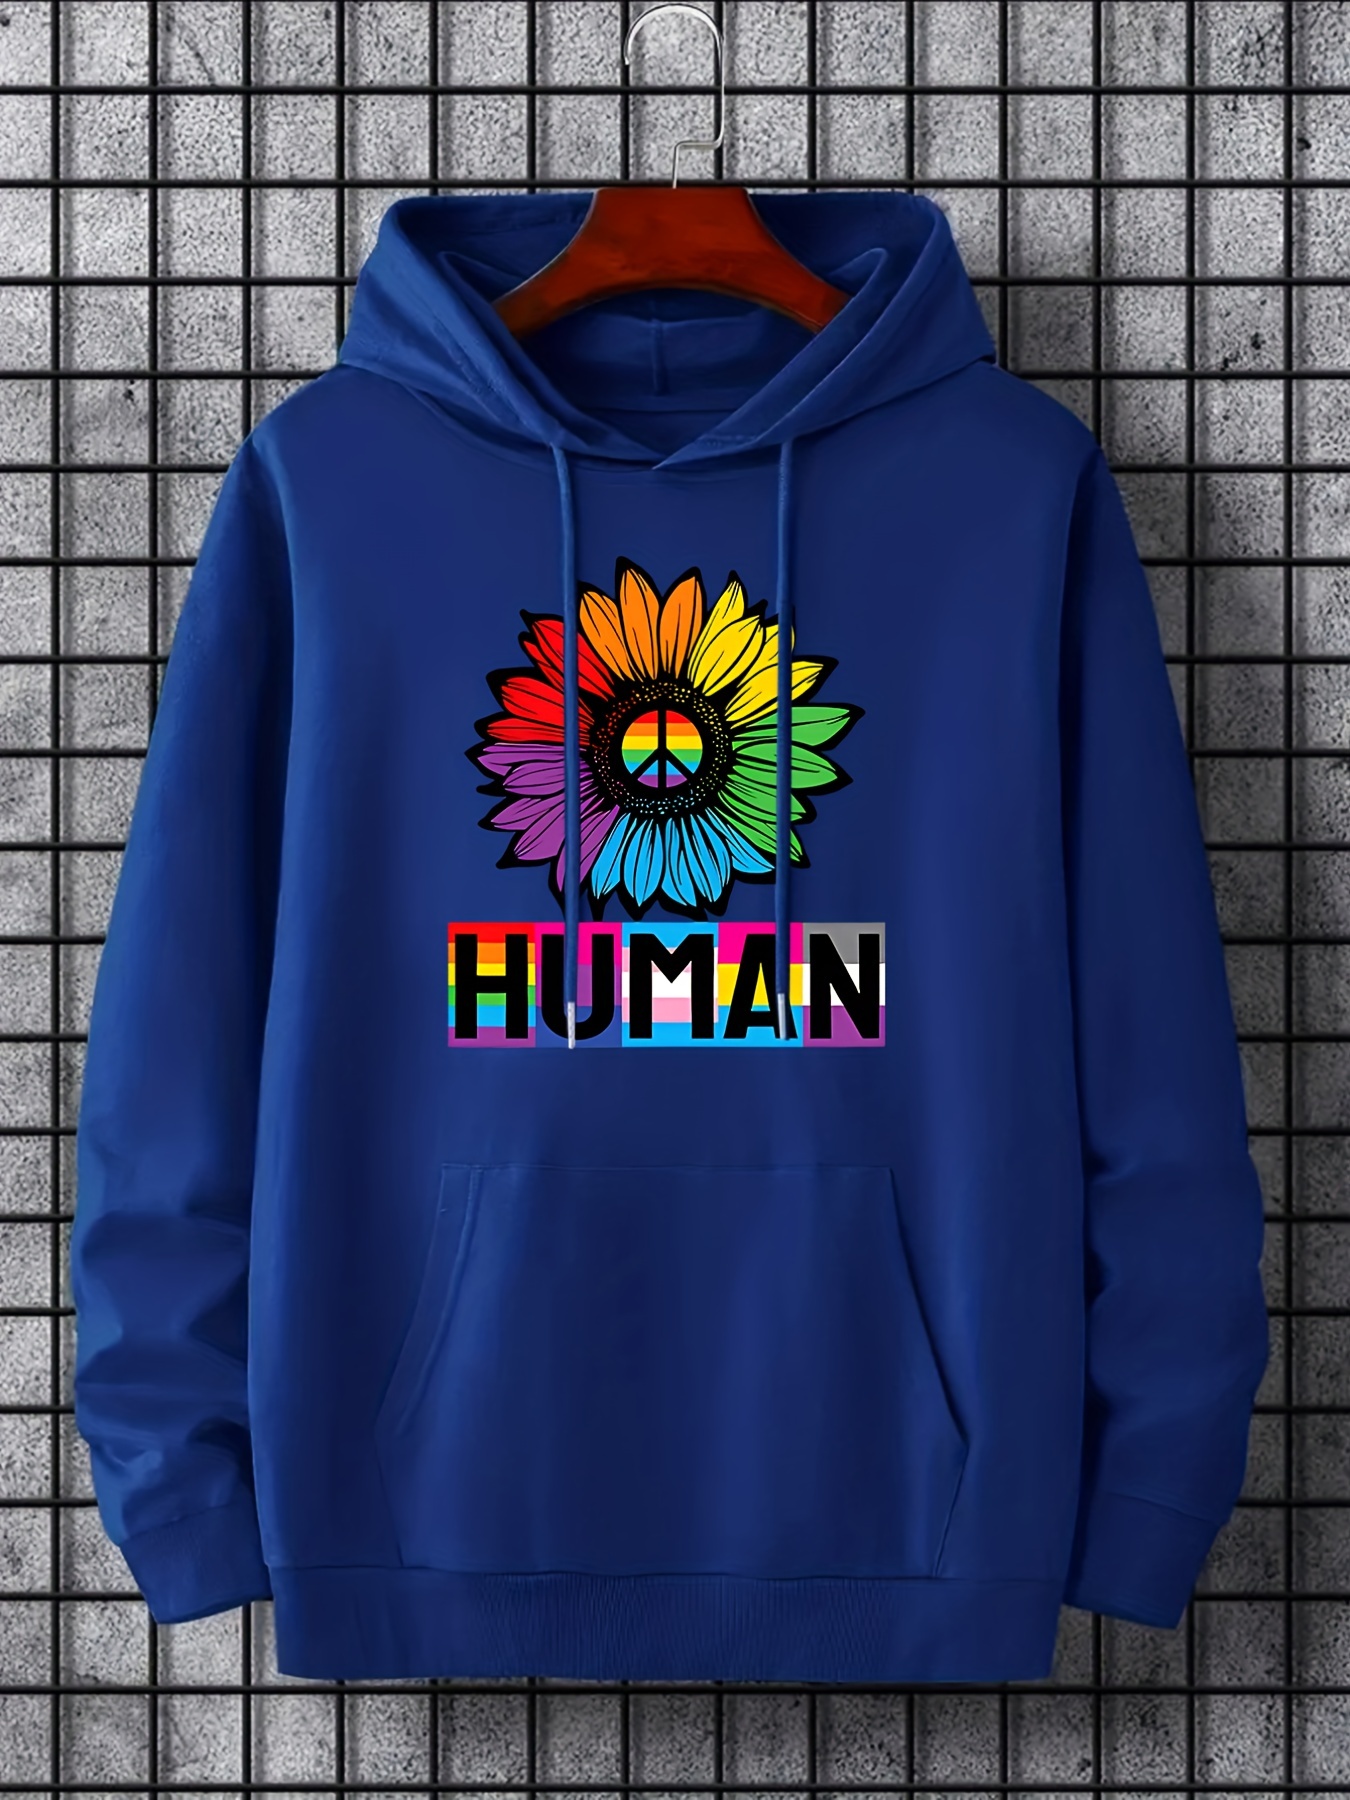 Rainbow Sunflower Human Print Hoodie Hoodies For Men Men S Casual